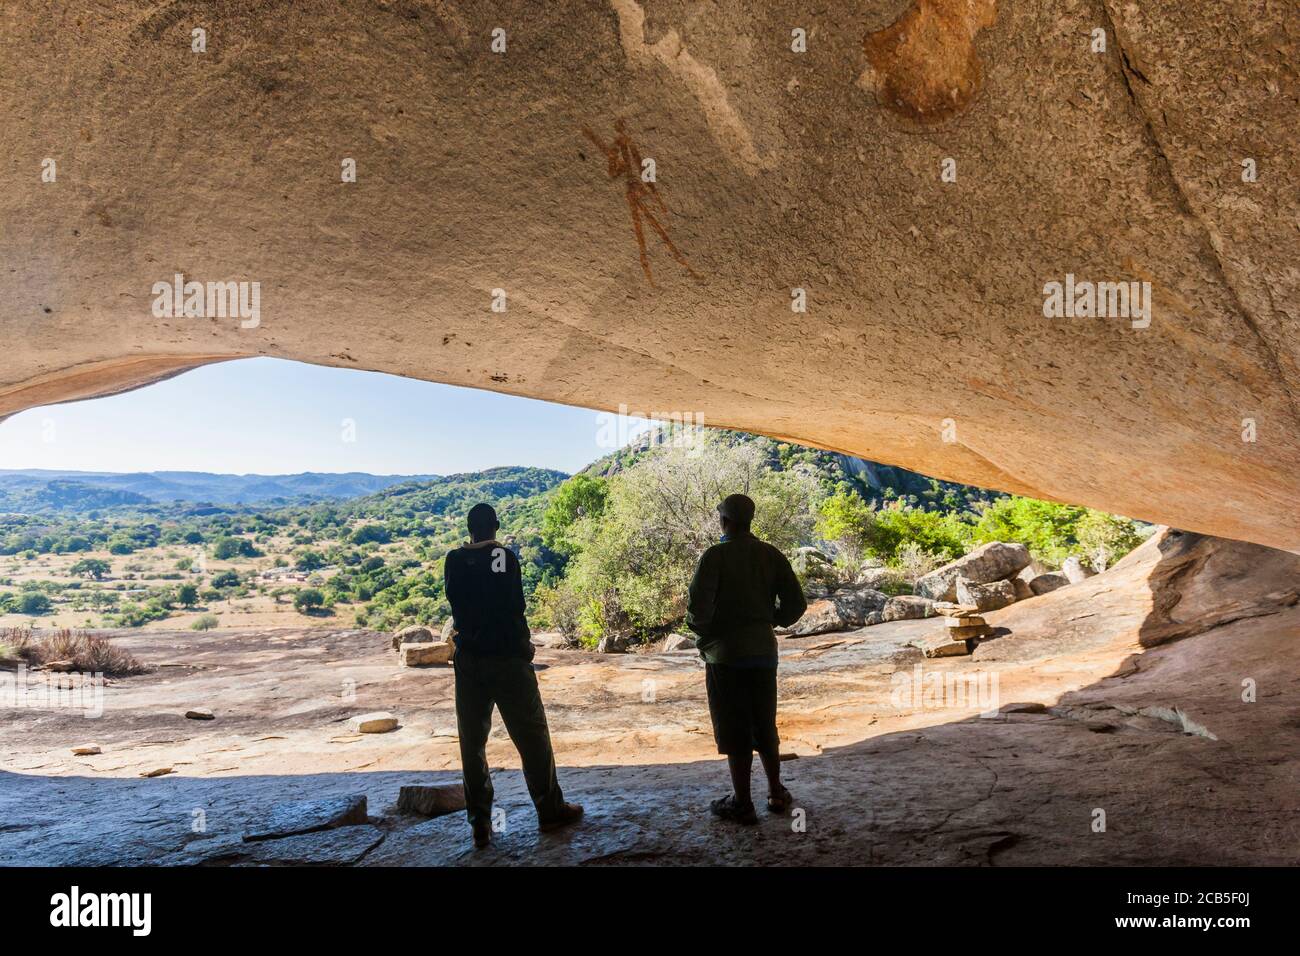 Matobo hills, 'Silozwane cave' rock painting site, rock art, Matobo National Park, suburbs of Bulawayo, Matabeleland South, Zimbabwe, Africa Stock Photo